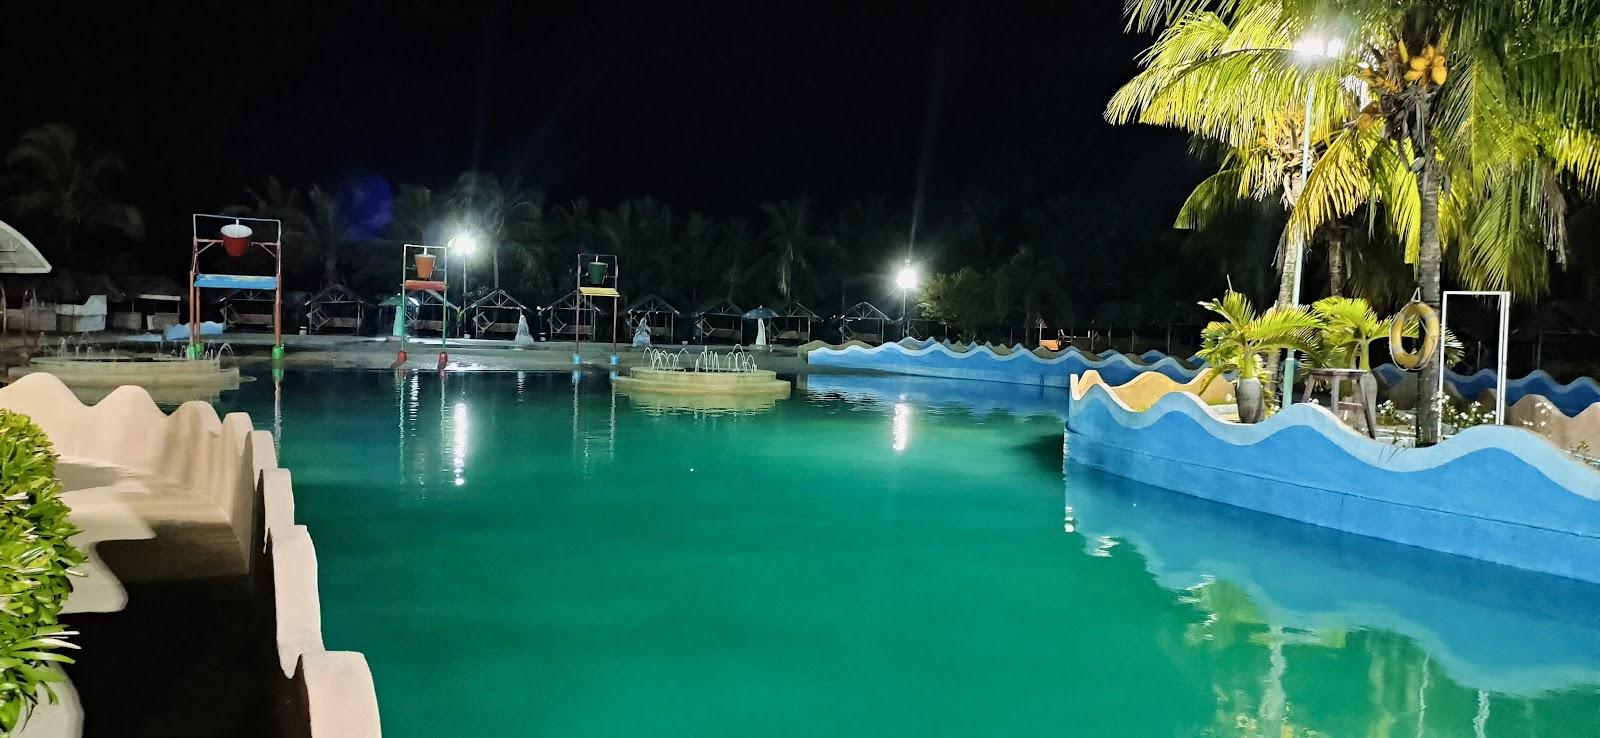 Sandee Moonbay Marina Caribbean Waterpark And Resort Photo